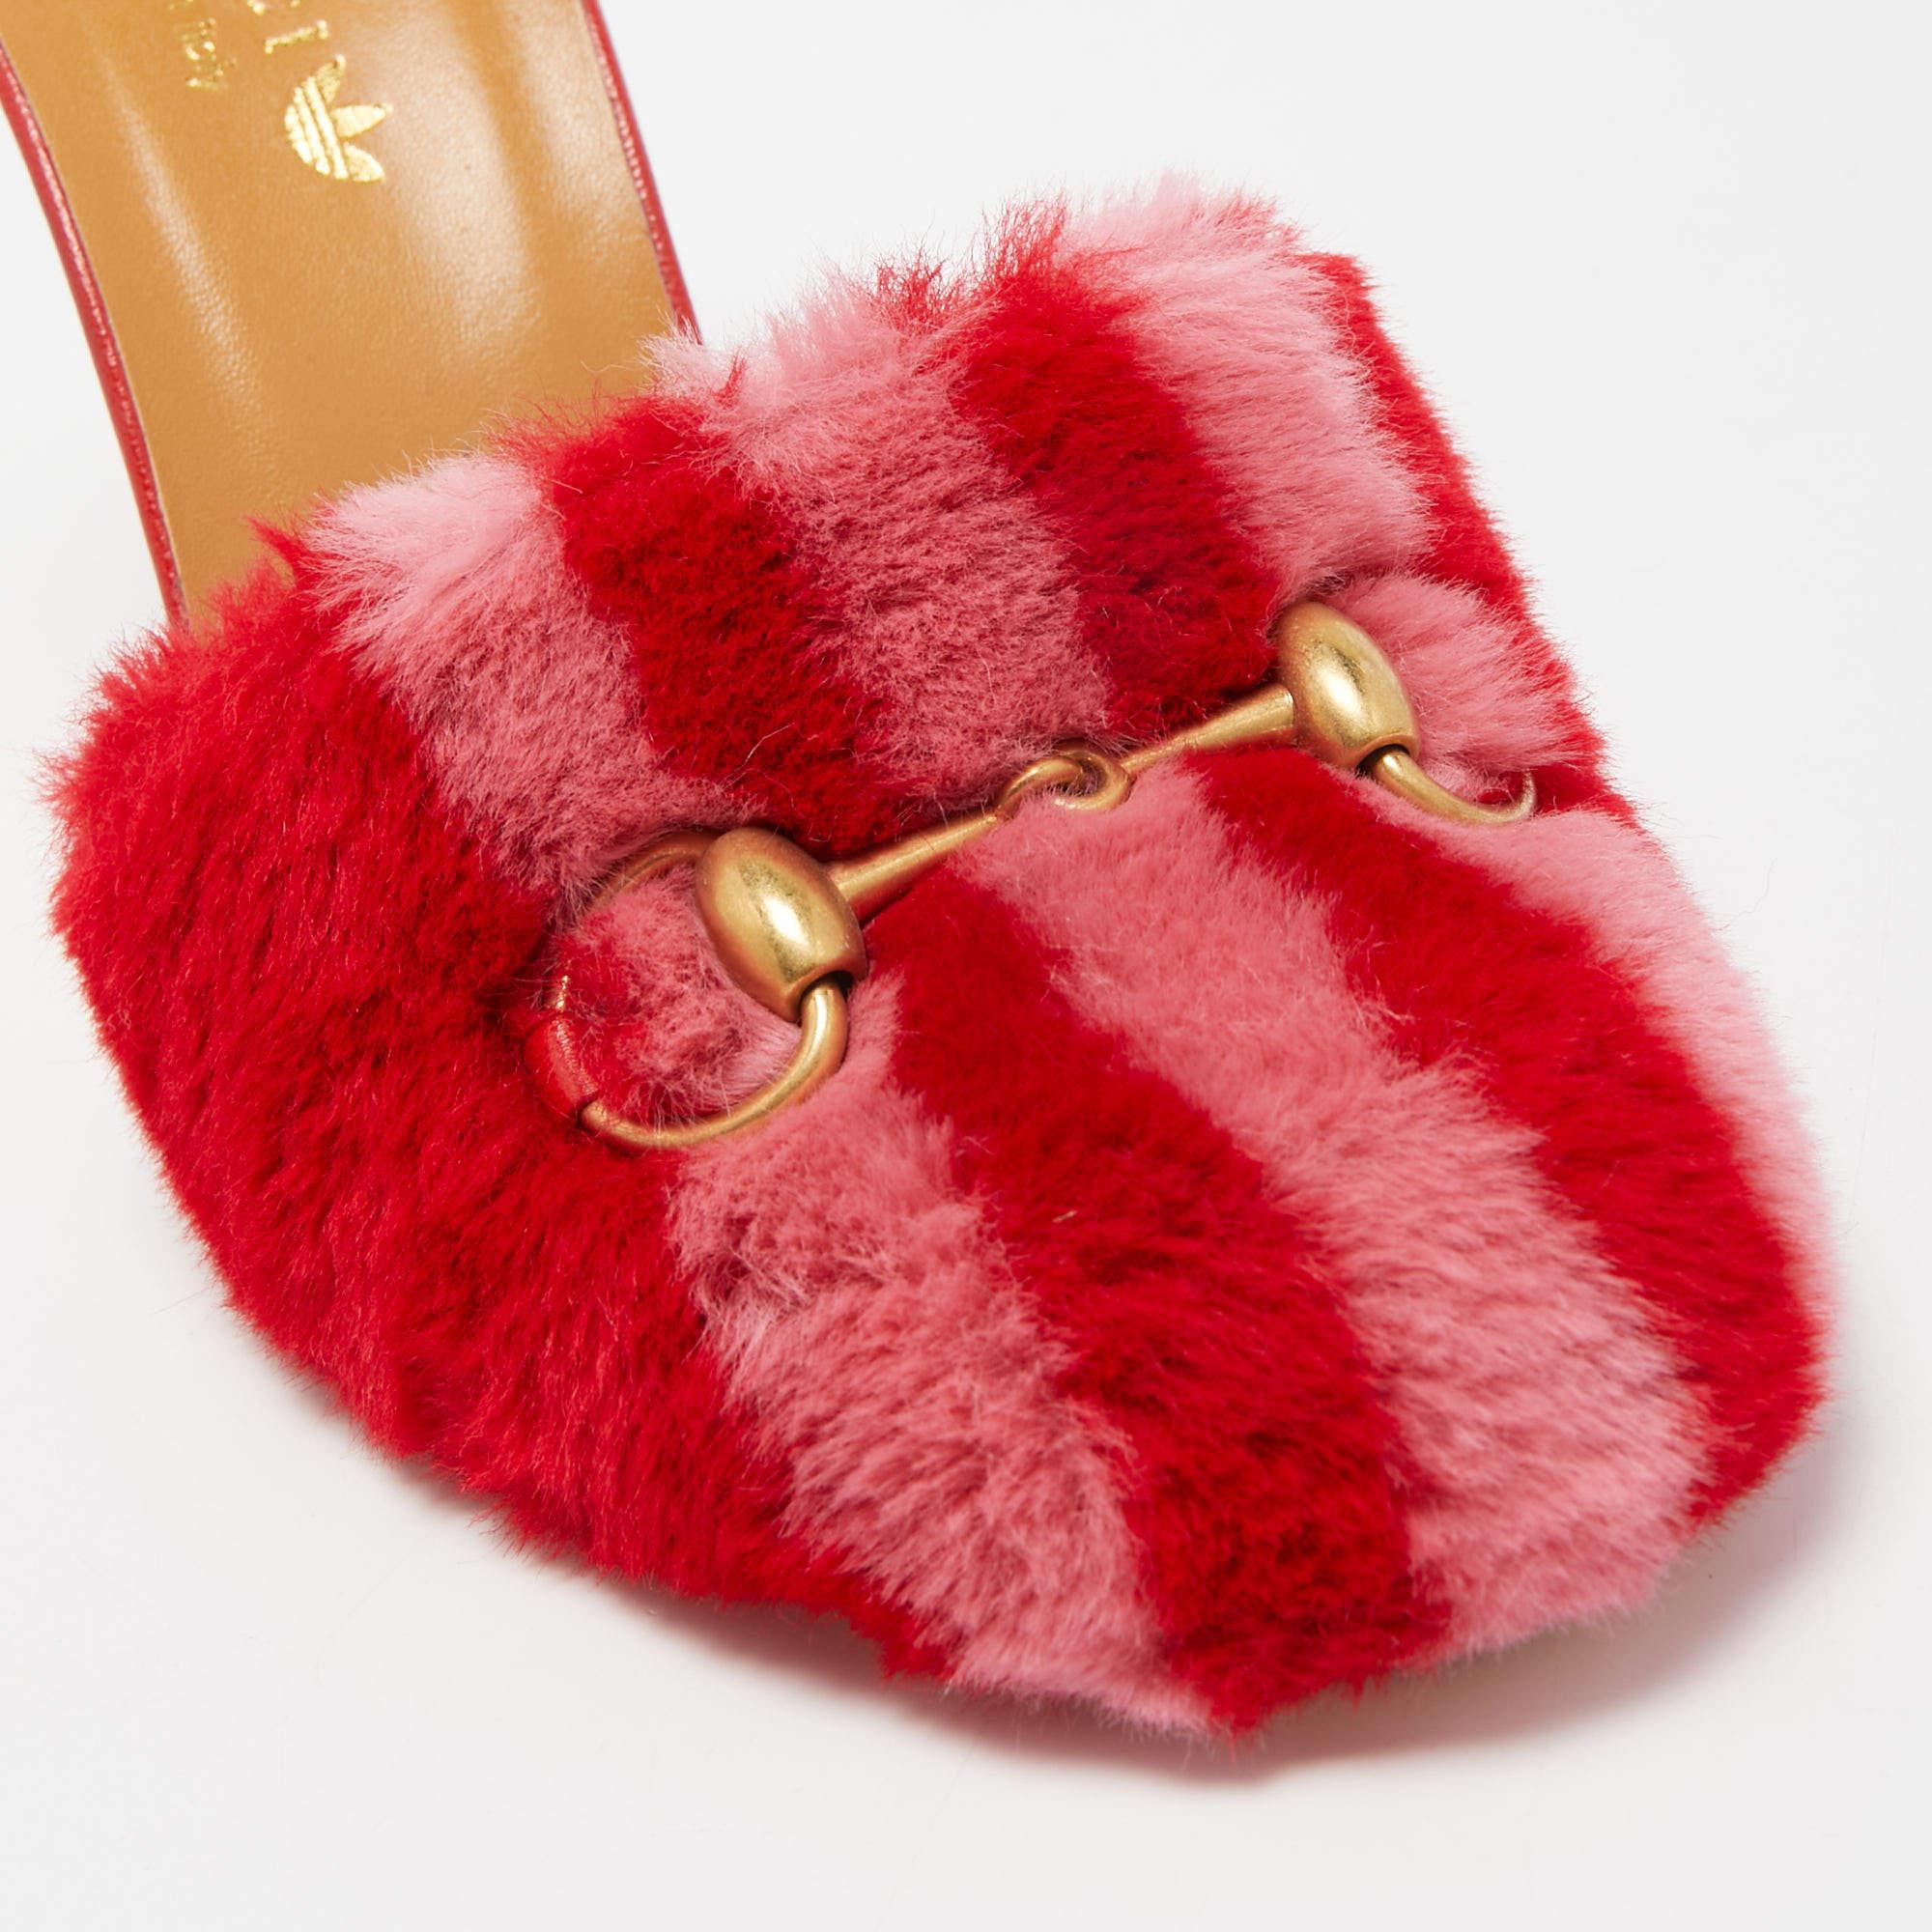 Gucci x Adidas Red/Pink Shearling Fur Horsebit Mules Size 36.5 2